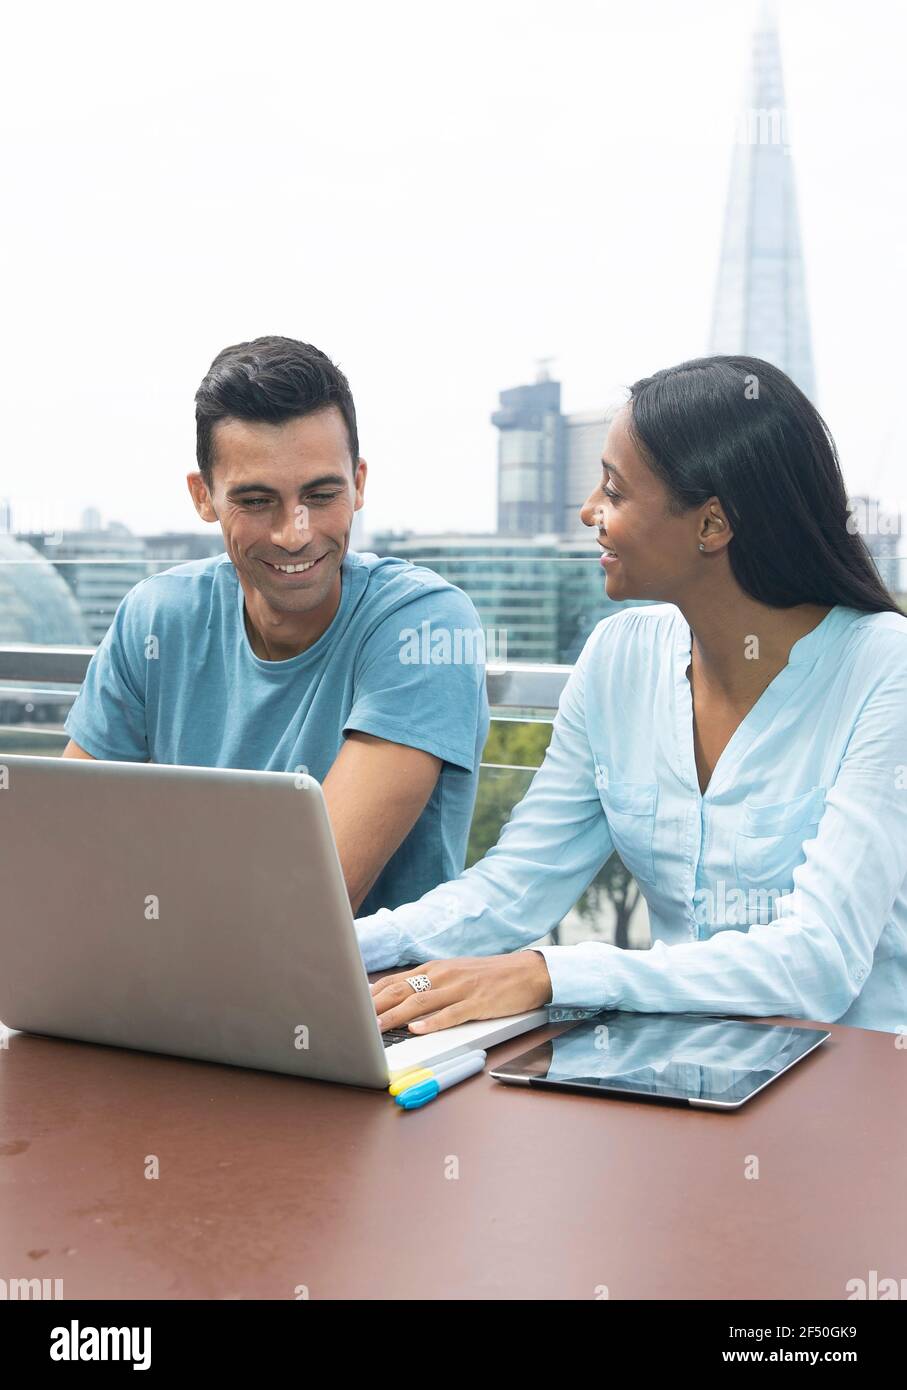 Smiling business people working at laptop on urban balcony, London, UK Stock Photo